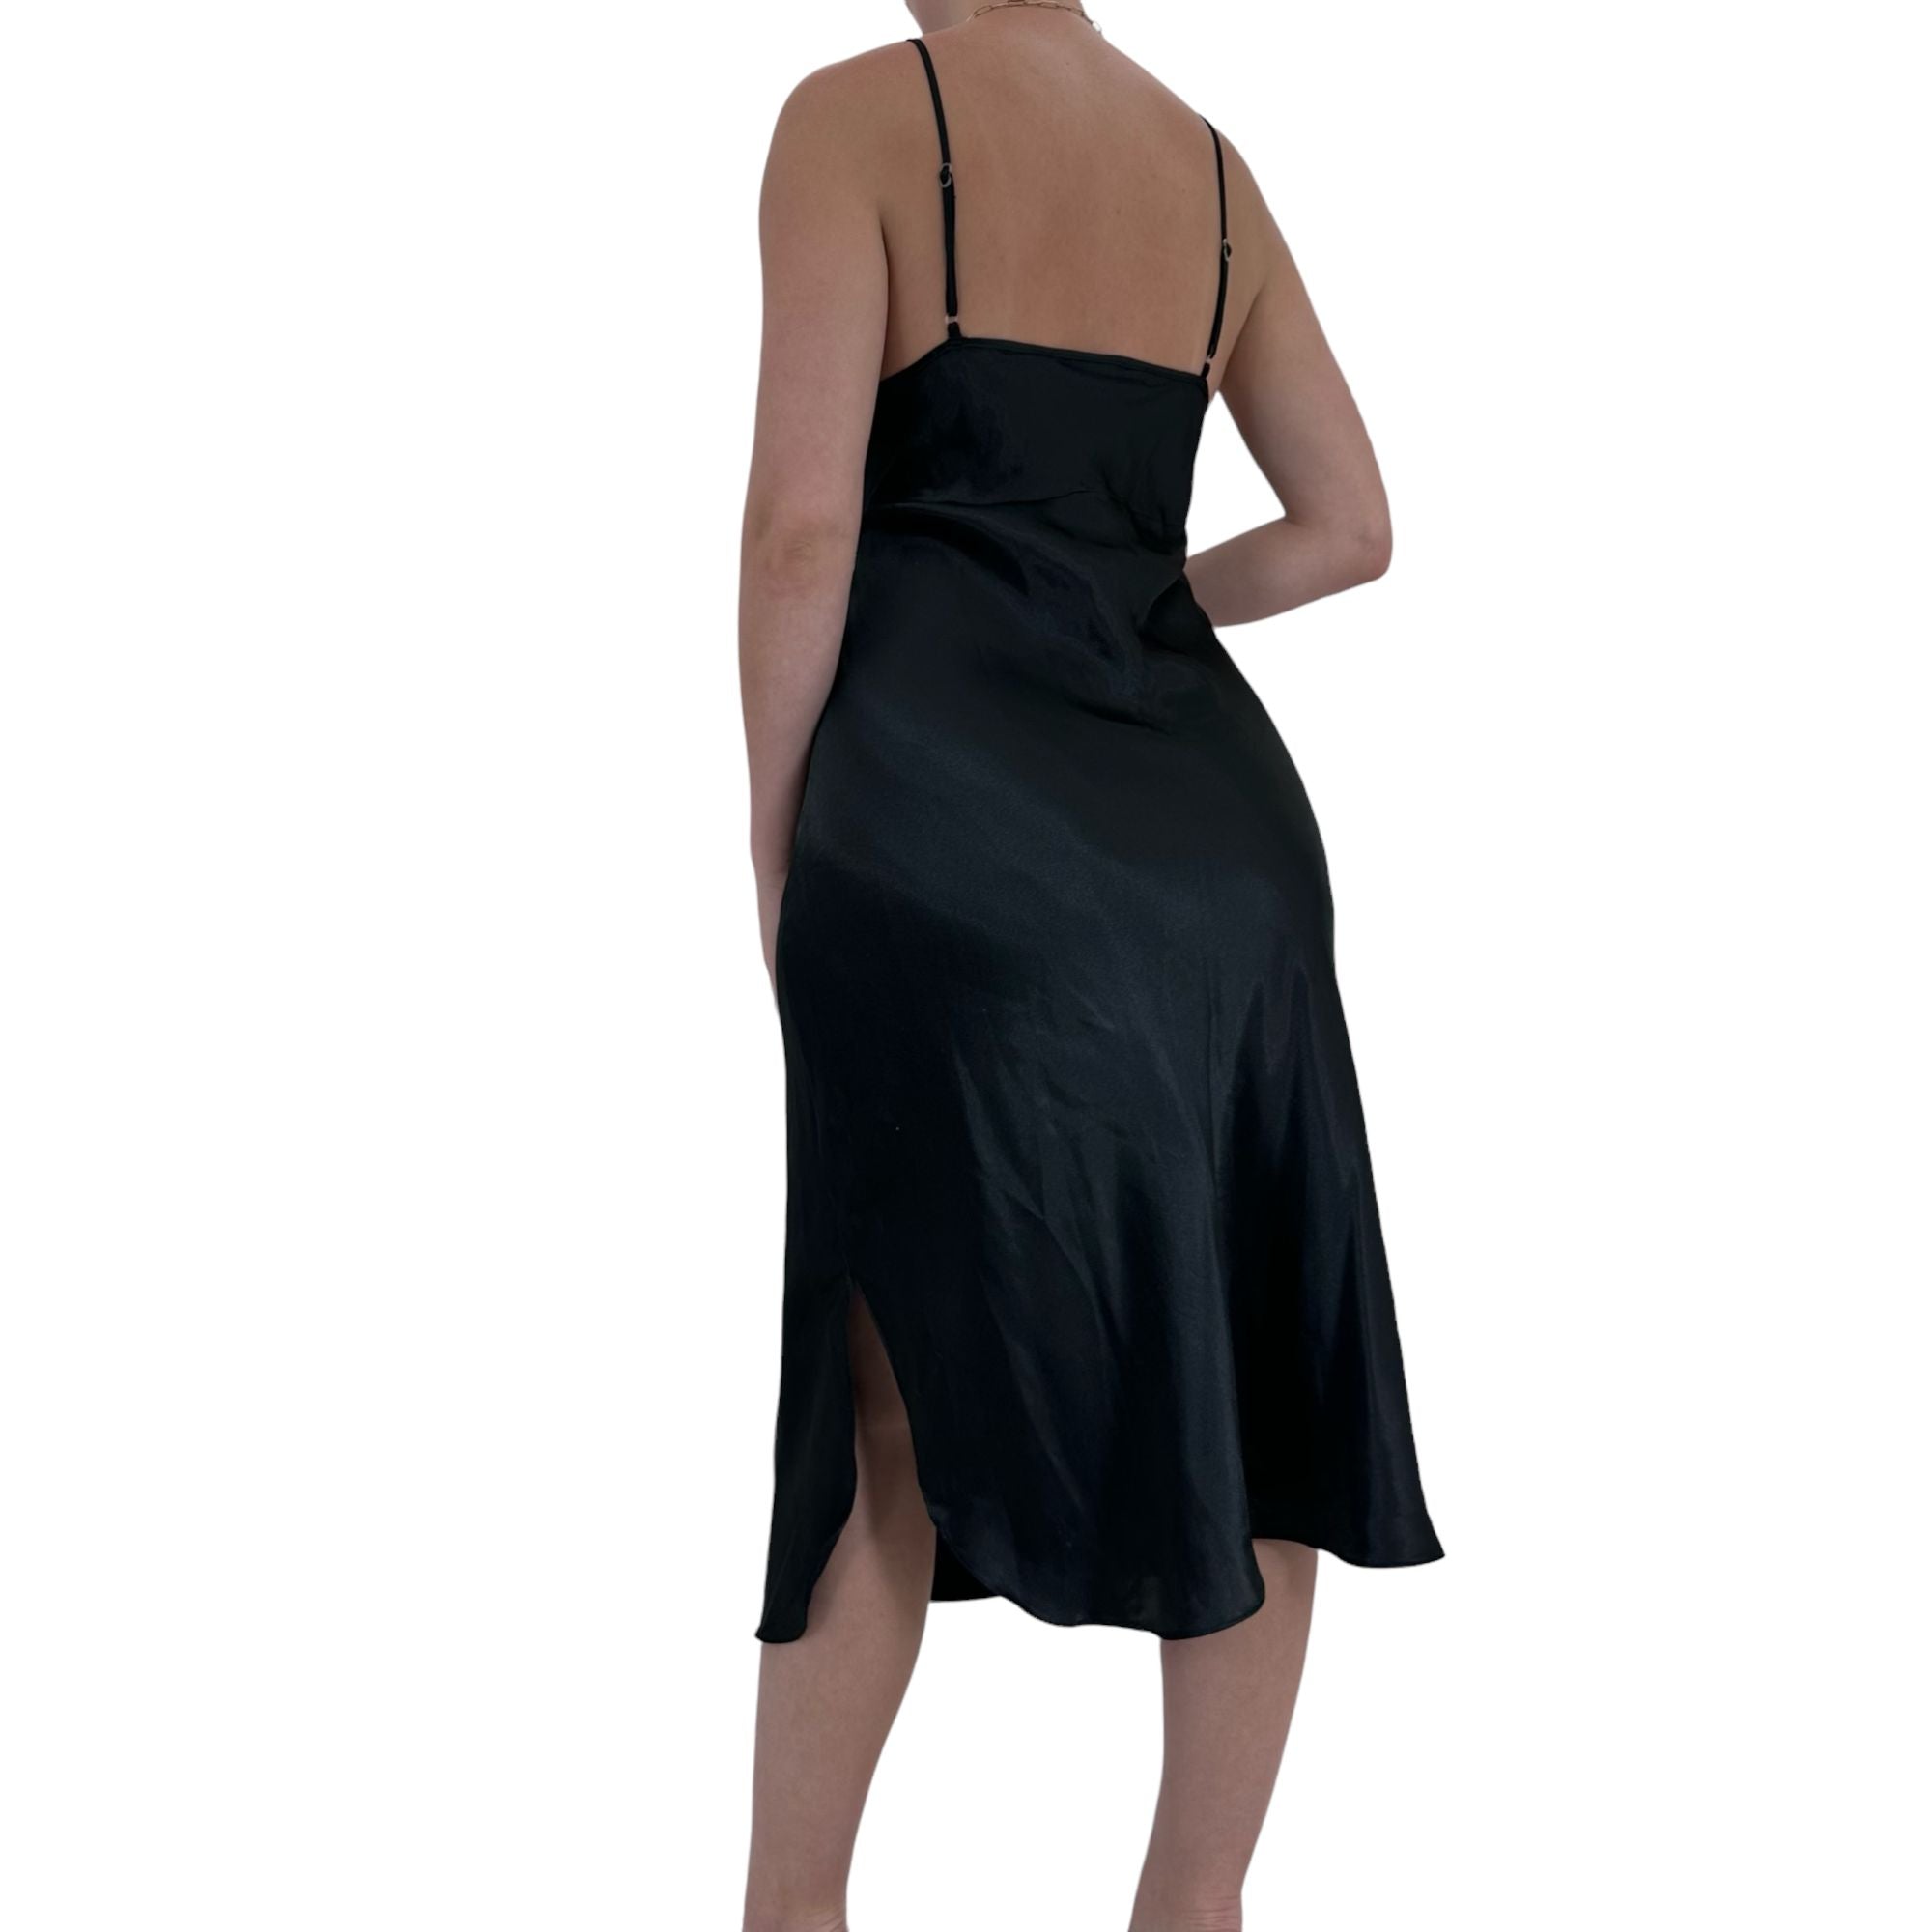 90s Vintage Black Satin Slip Dress [M]